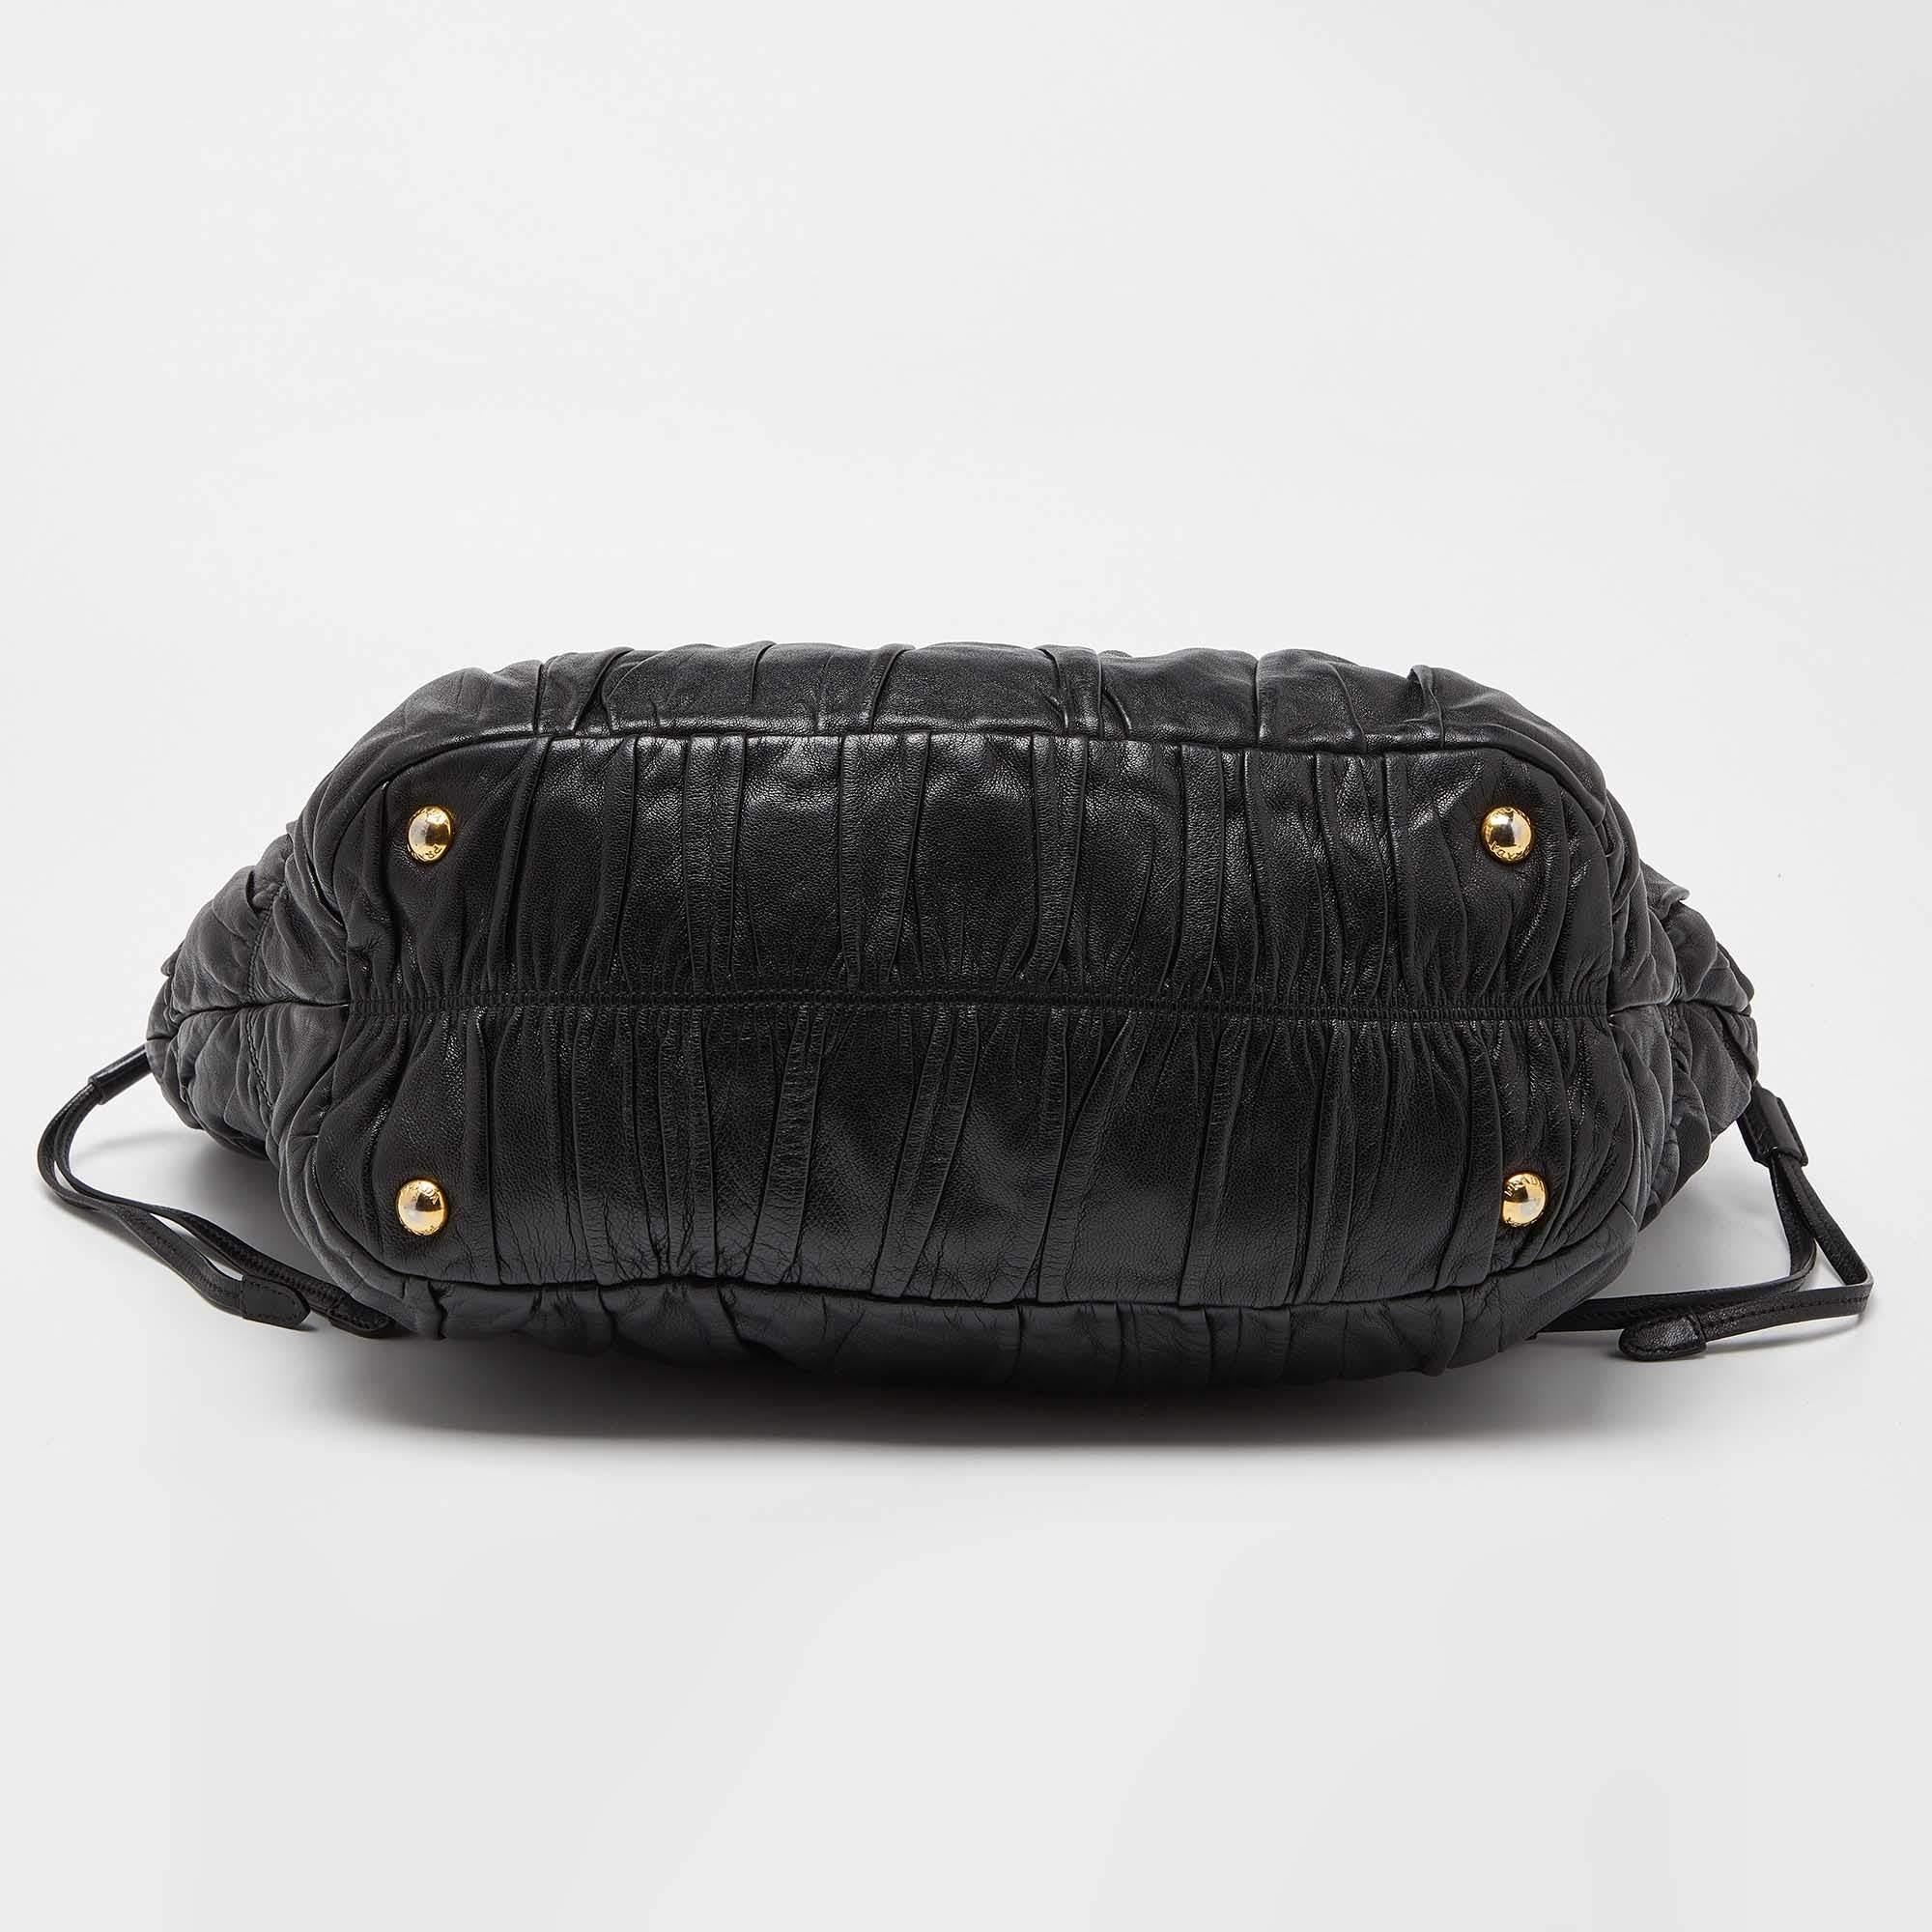 Prada Black Nappa Gaufre Leather Tote For Sale 1